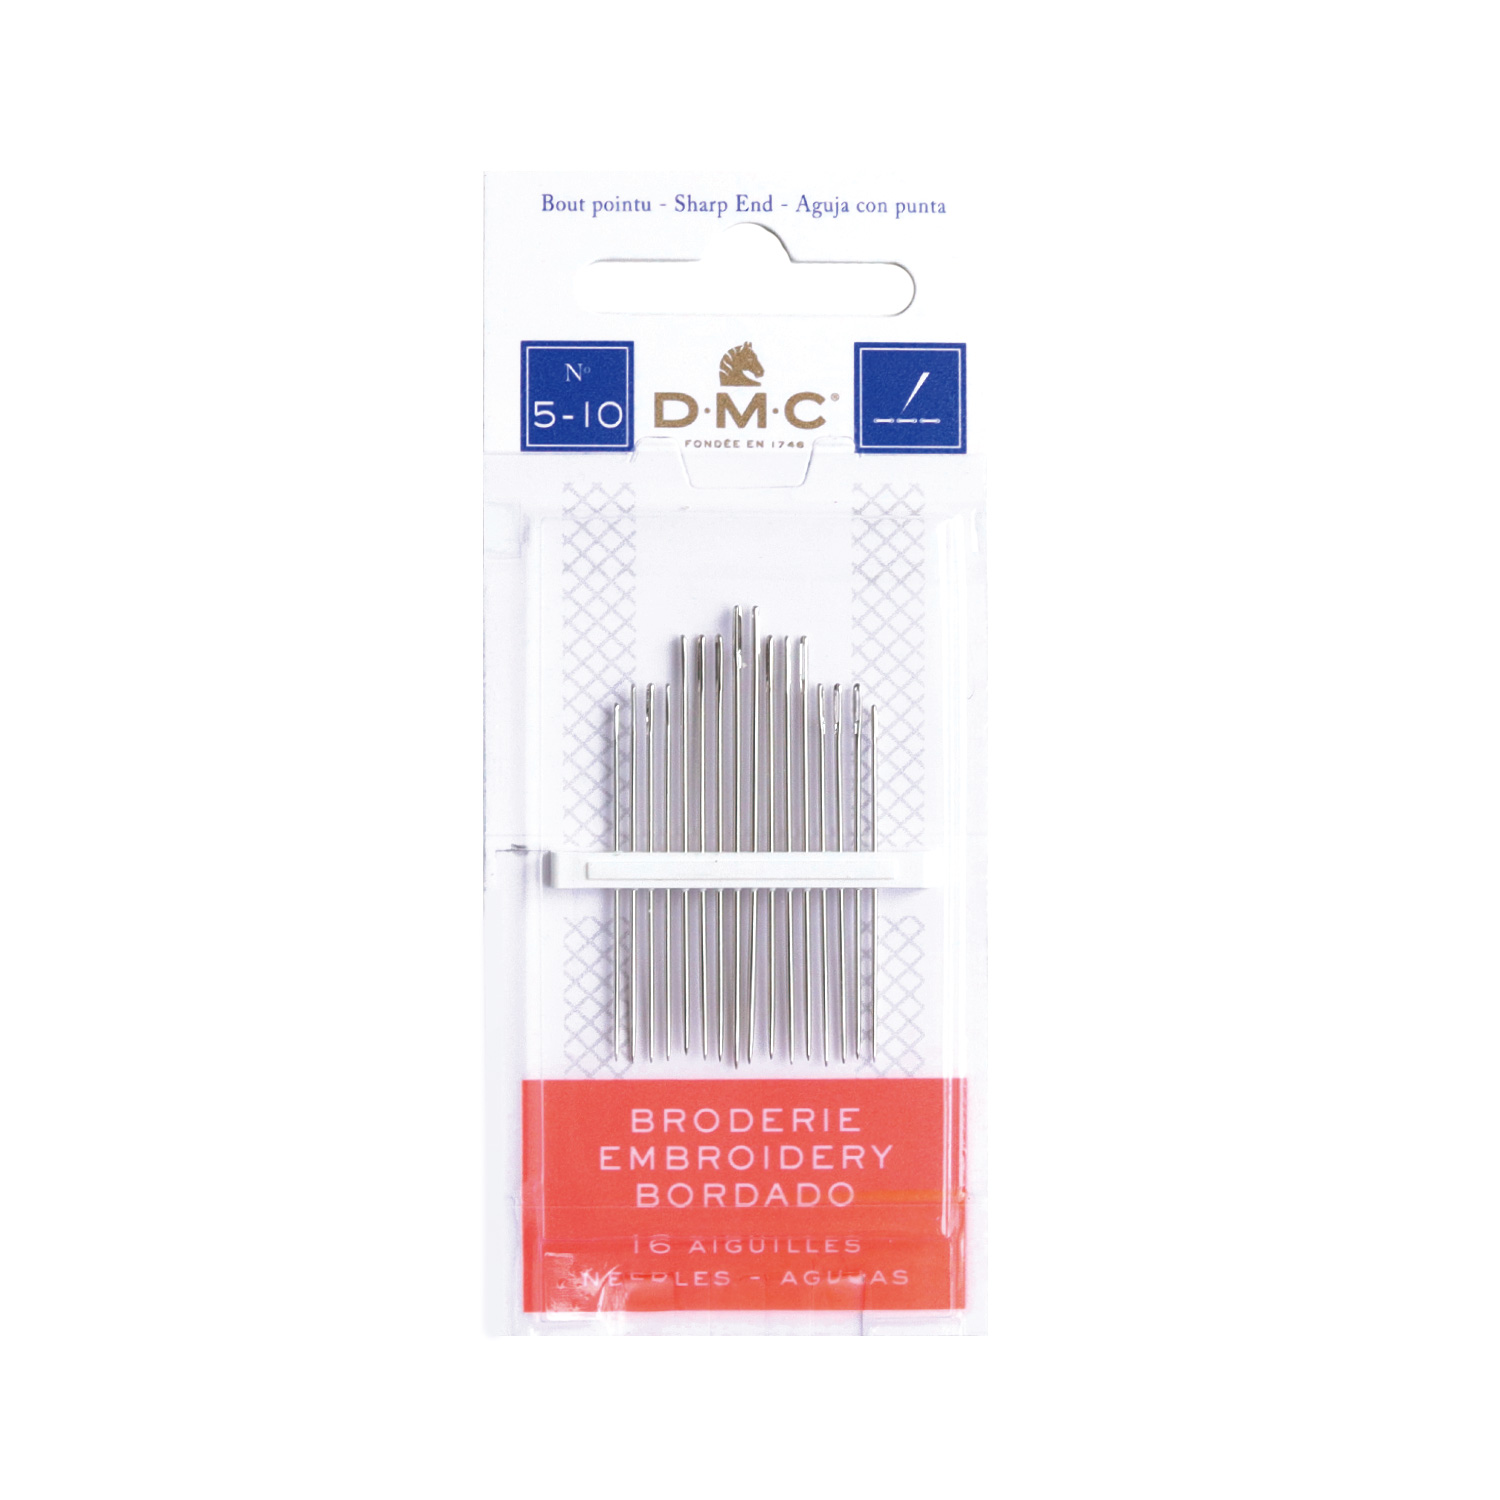 DMC1765-3 Embroidery needle #5-10 (pcs)